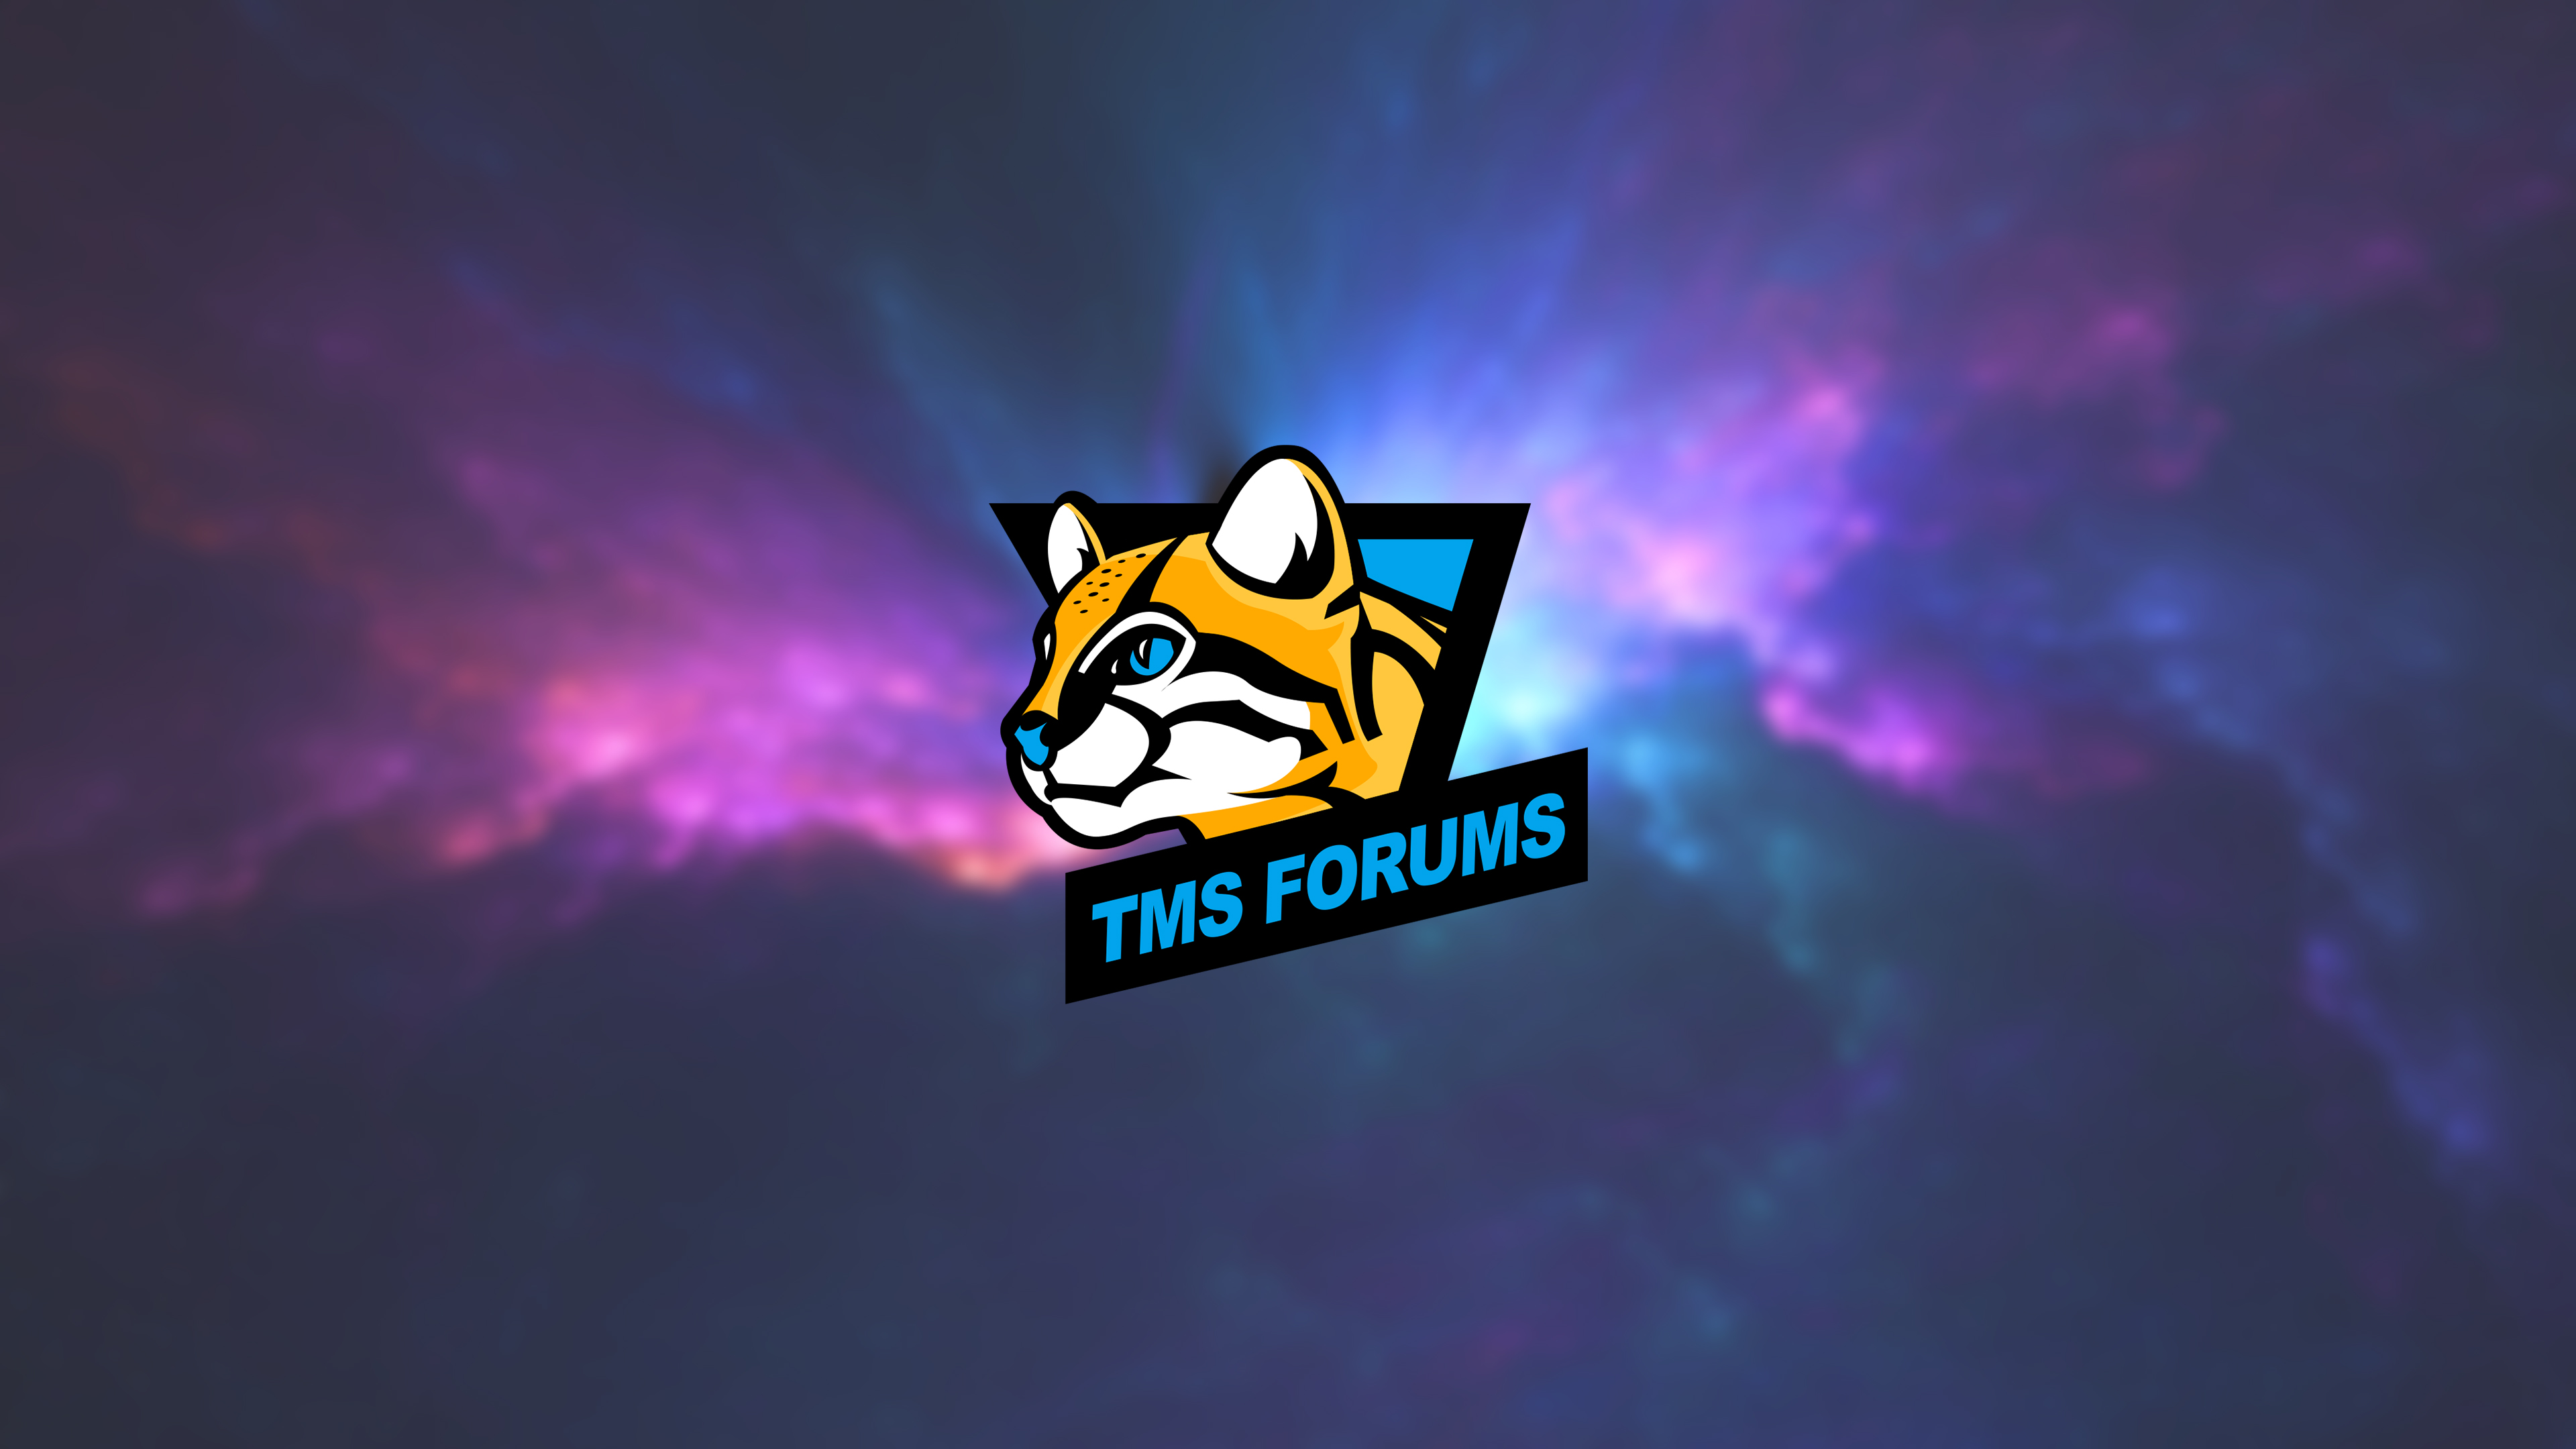 TMS Forums Logo Wallpaper Space Blur.jpg